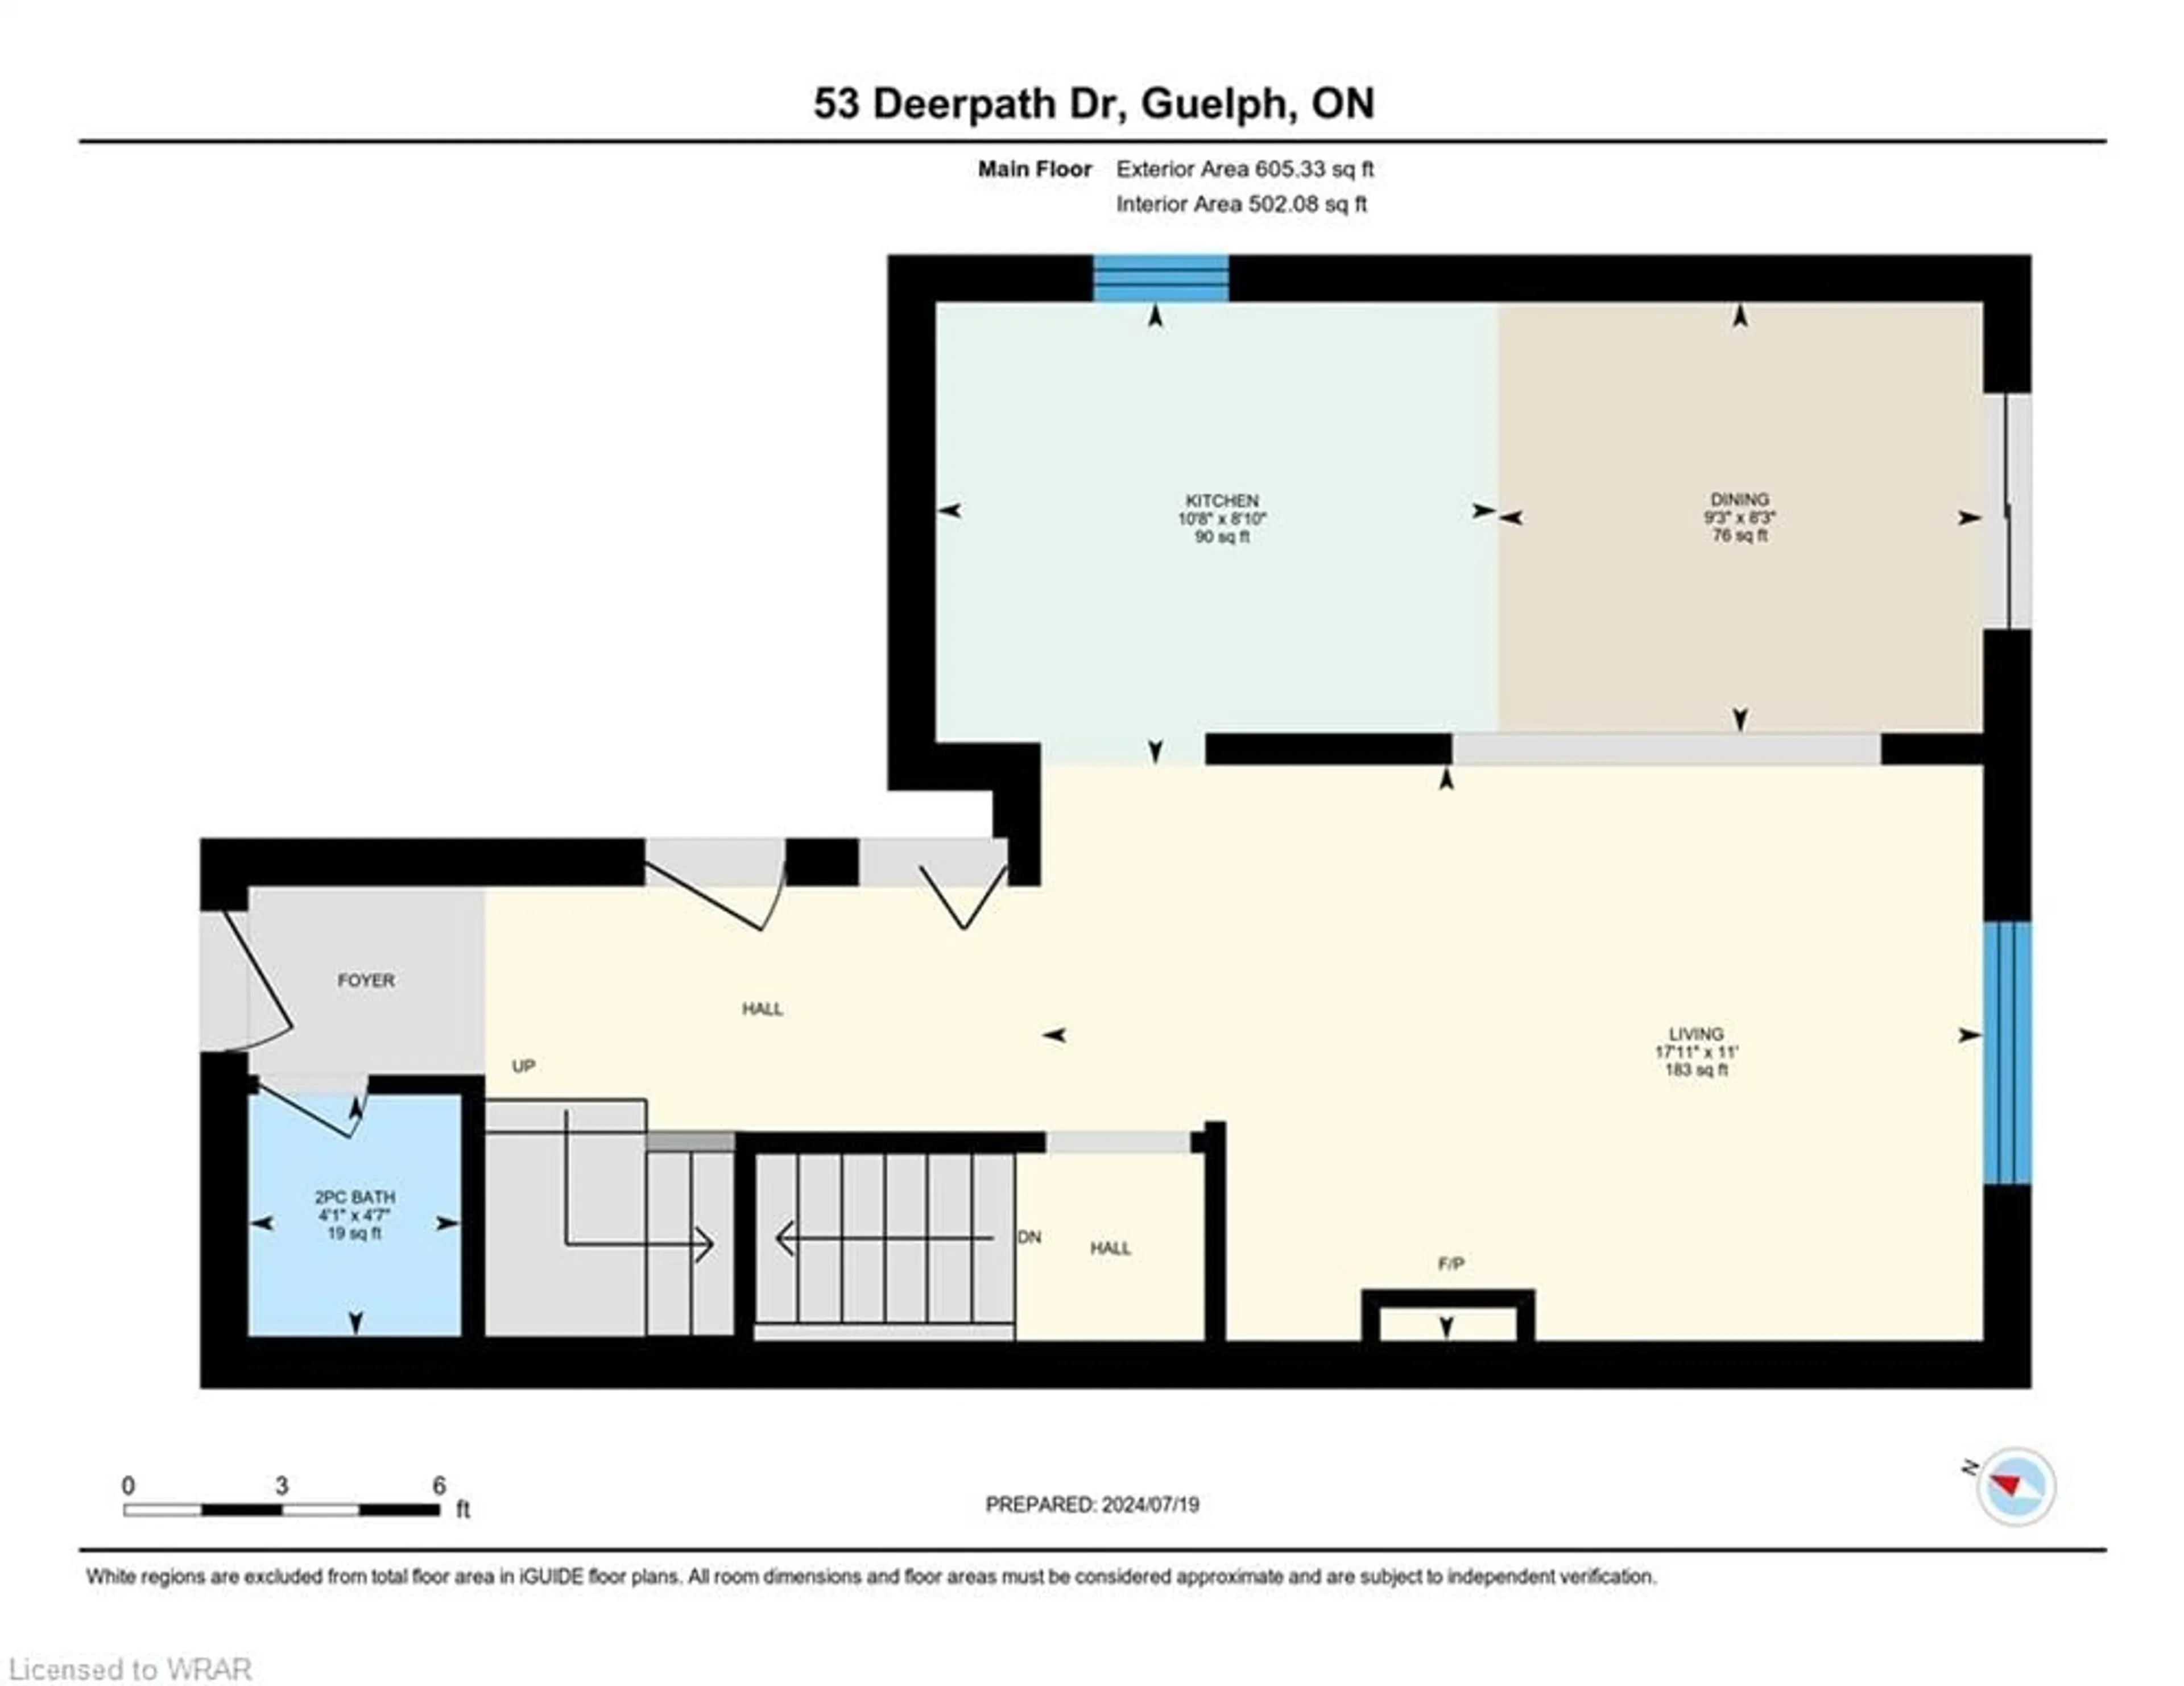 Floor plan for 53 Deerpath Dr, Guelph Ontario N1K 1V1